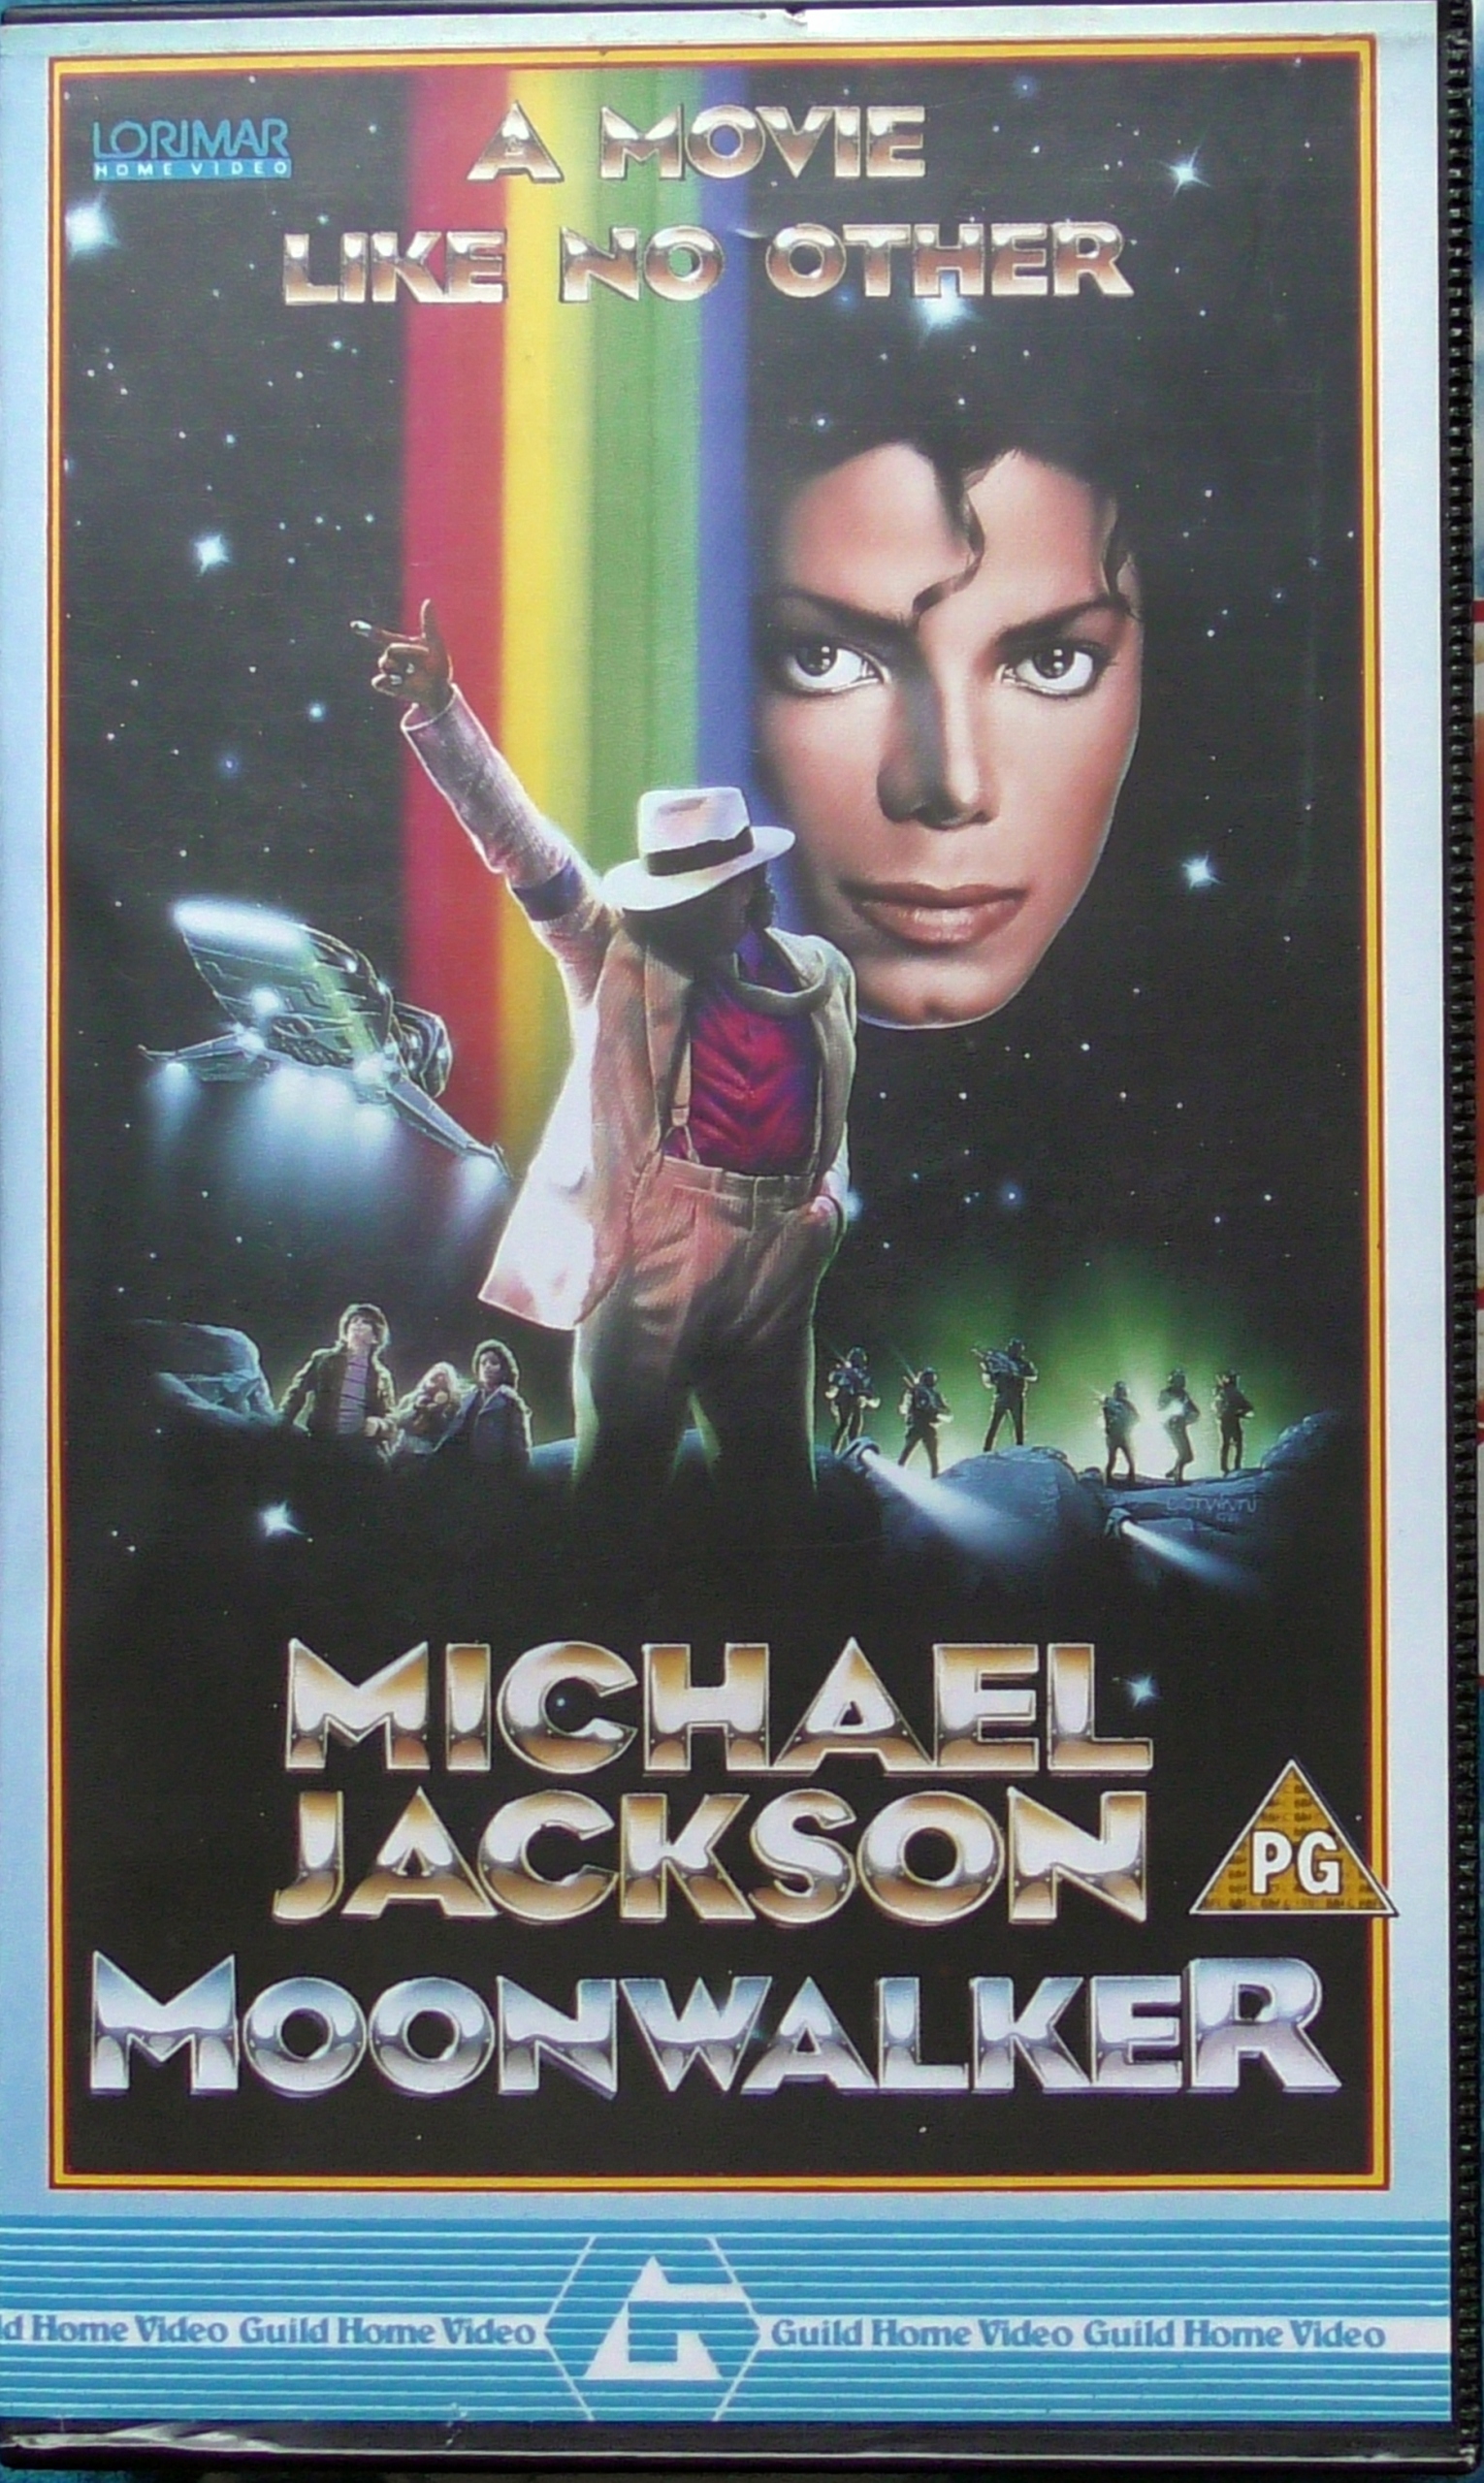 Michael jackson moonwalker. Moonwalker 1988. Michael Jackson's Moonwalker. Michael Jackson Moonwalker 1988. Michael Jackson VHS 1988.